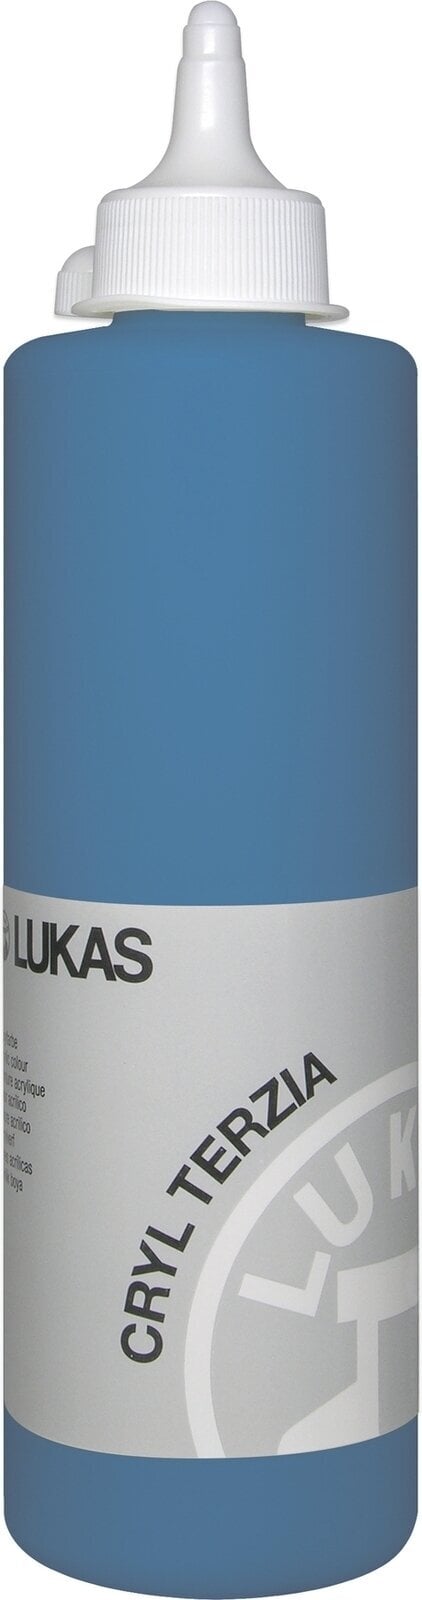 Akrilna barva Lukas Cryl Terzia Acrylic Paint Plastic Bottle Akrilna barva Cerulean Blue 500 ml 1 kos